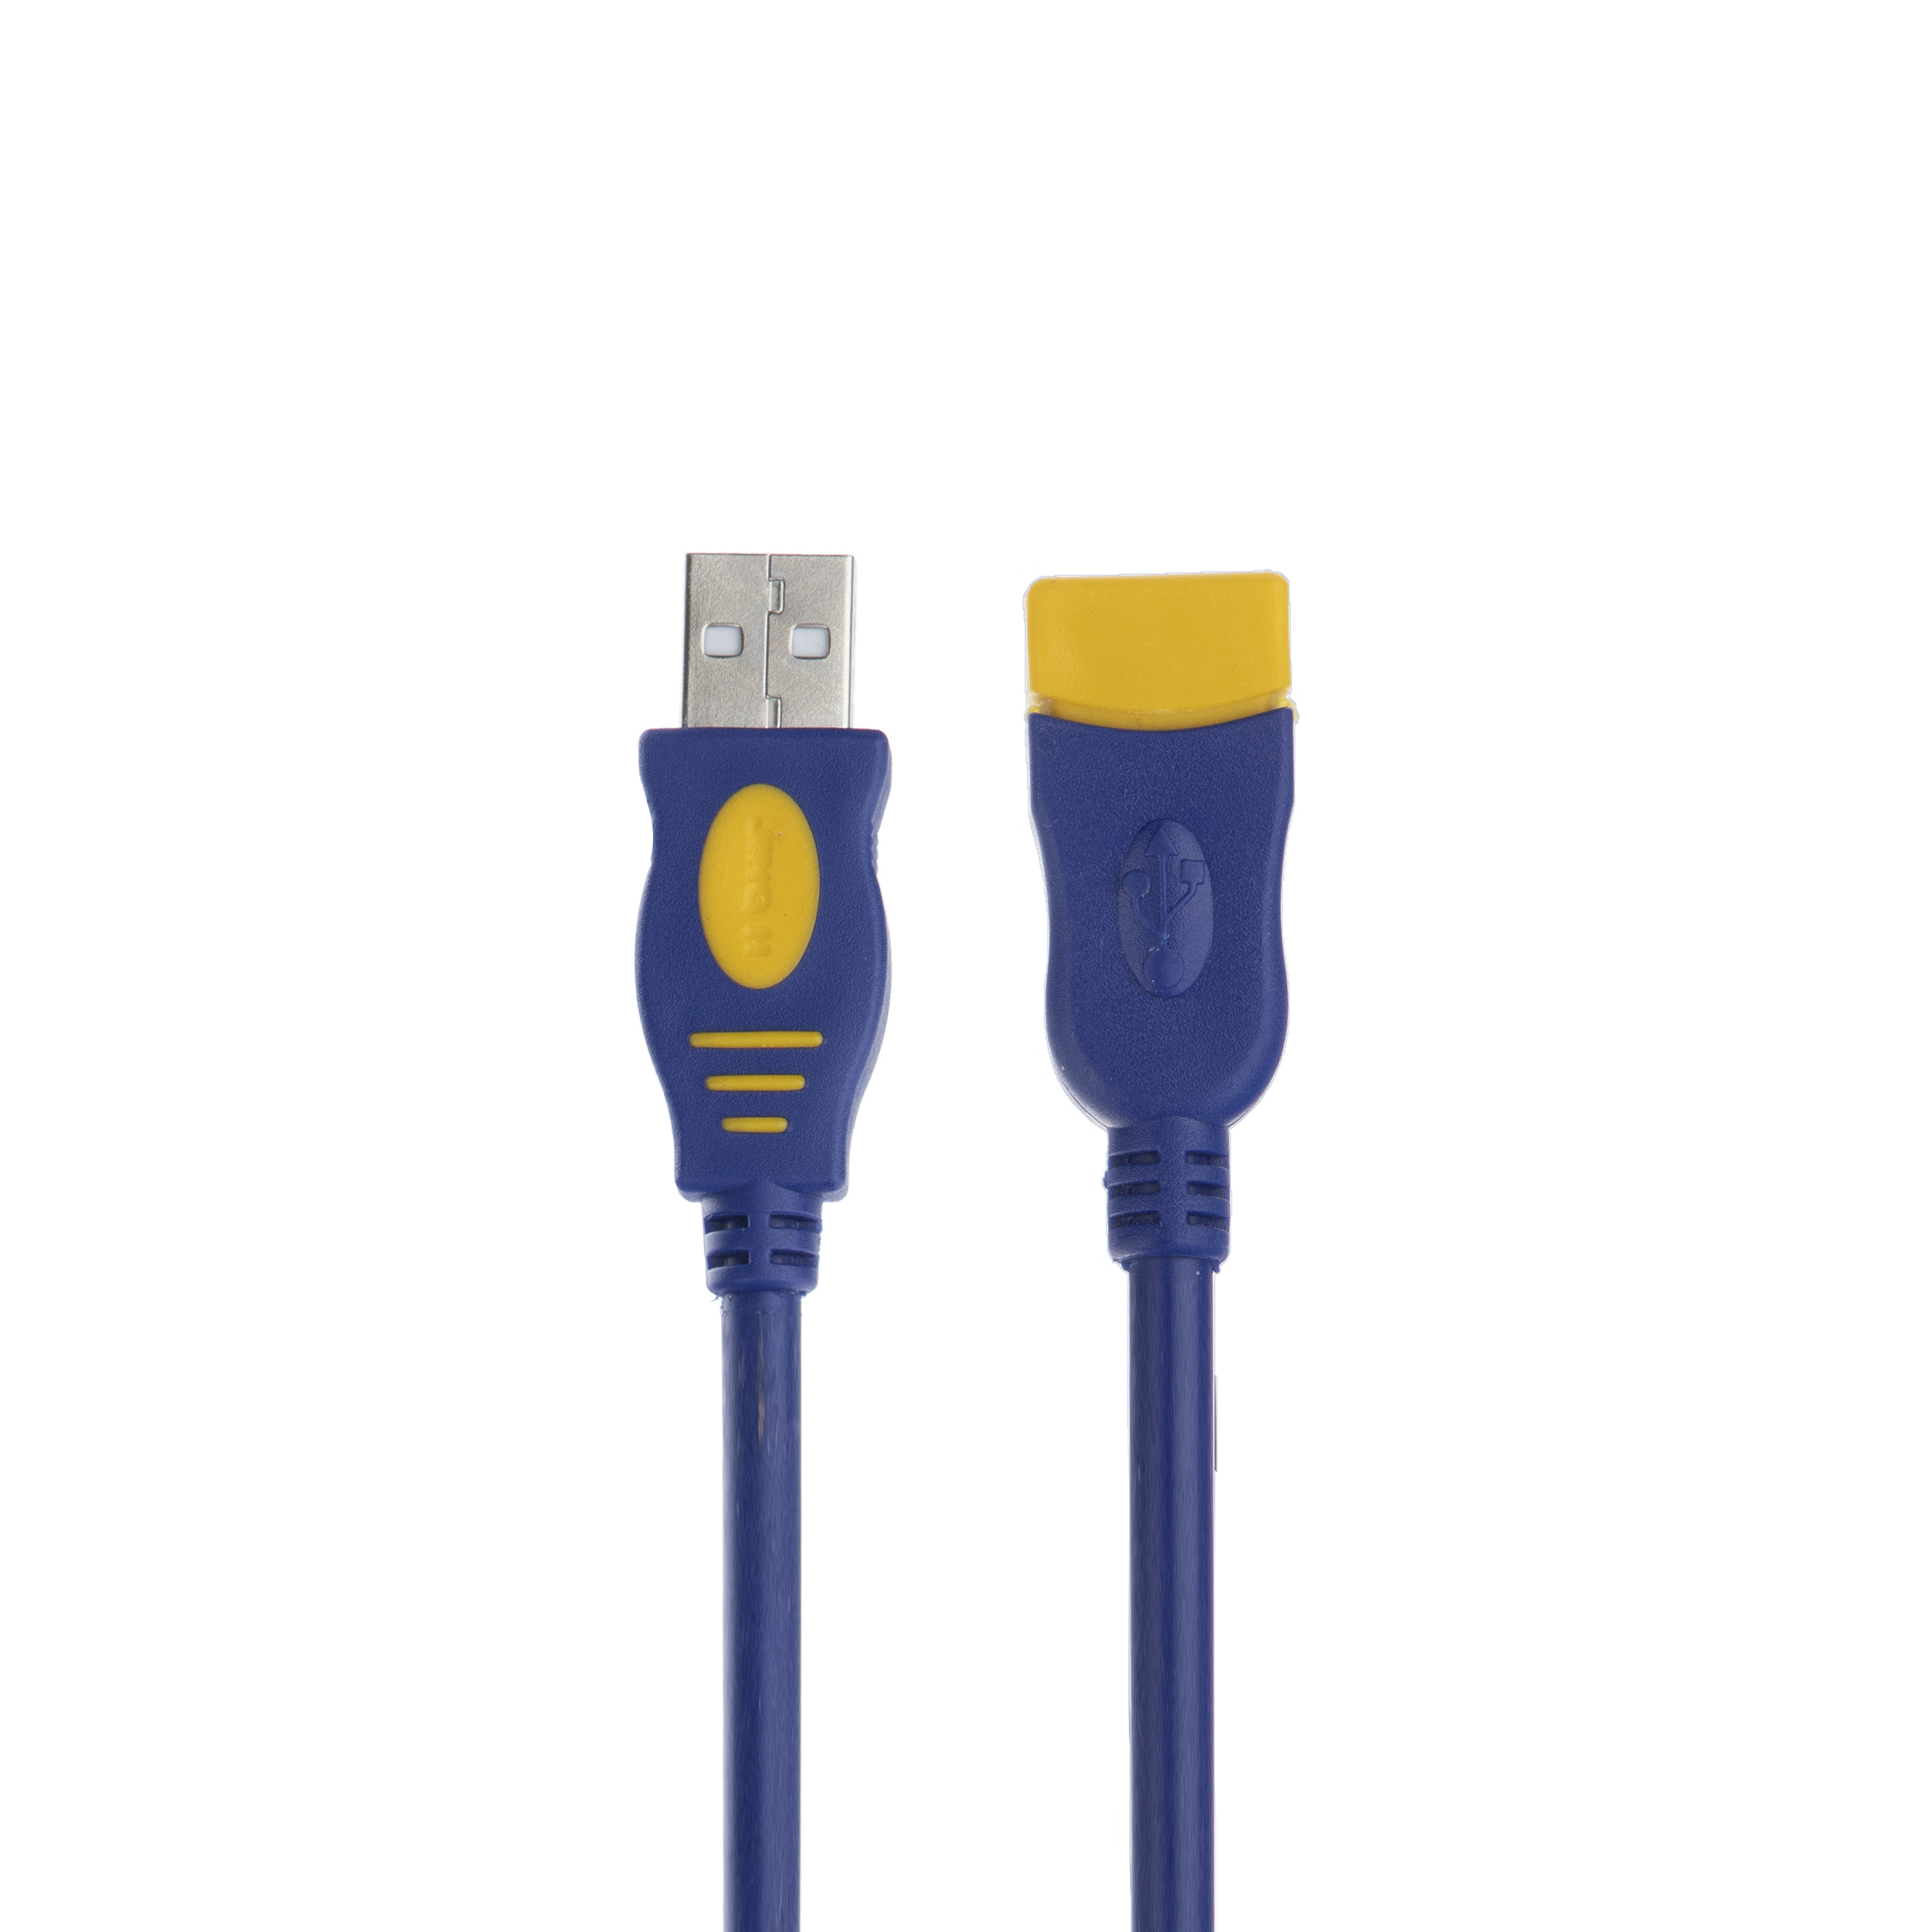 کابل افزایش طول USB 2.0 سویز کد 61 طول 10 متر